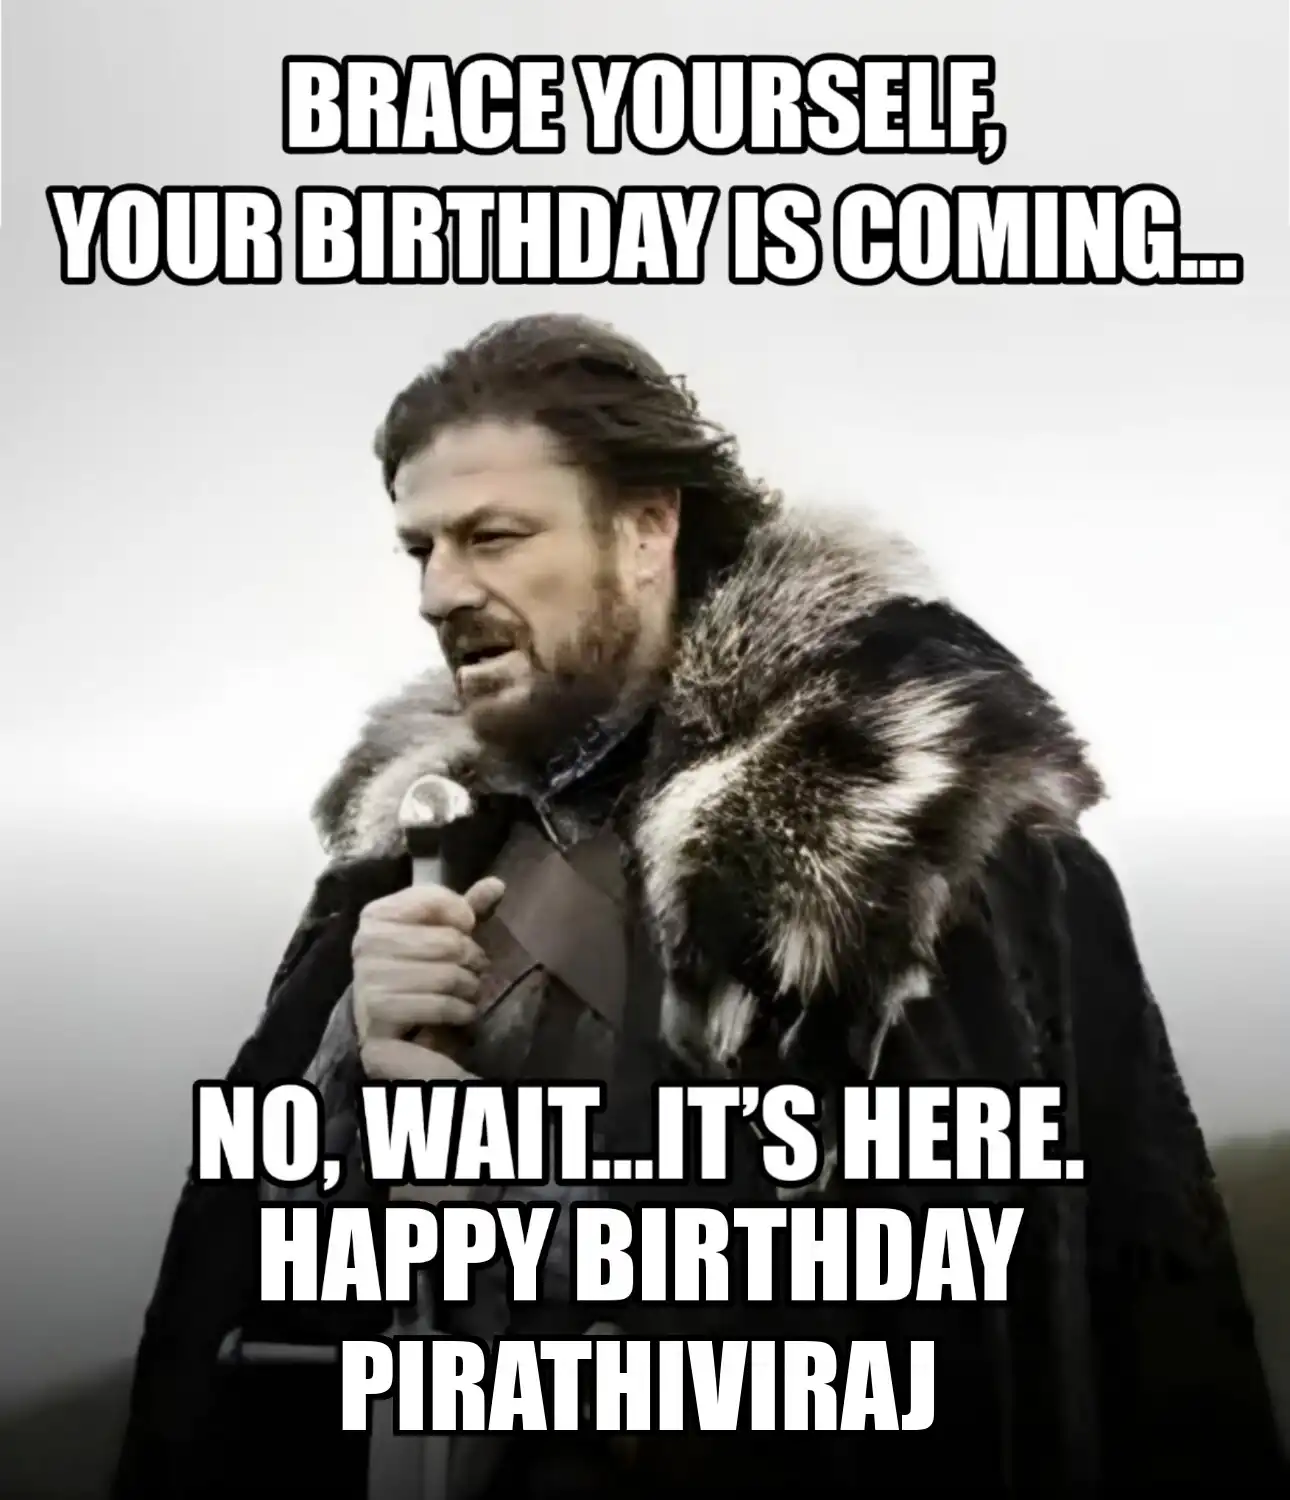 Happy Birthday Pirathiviraj Brace Yourself Your Birthday Is Coming Meme